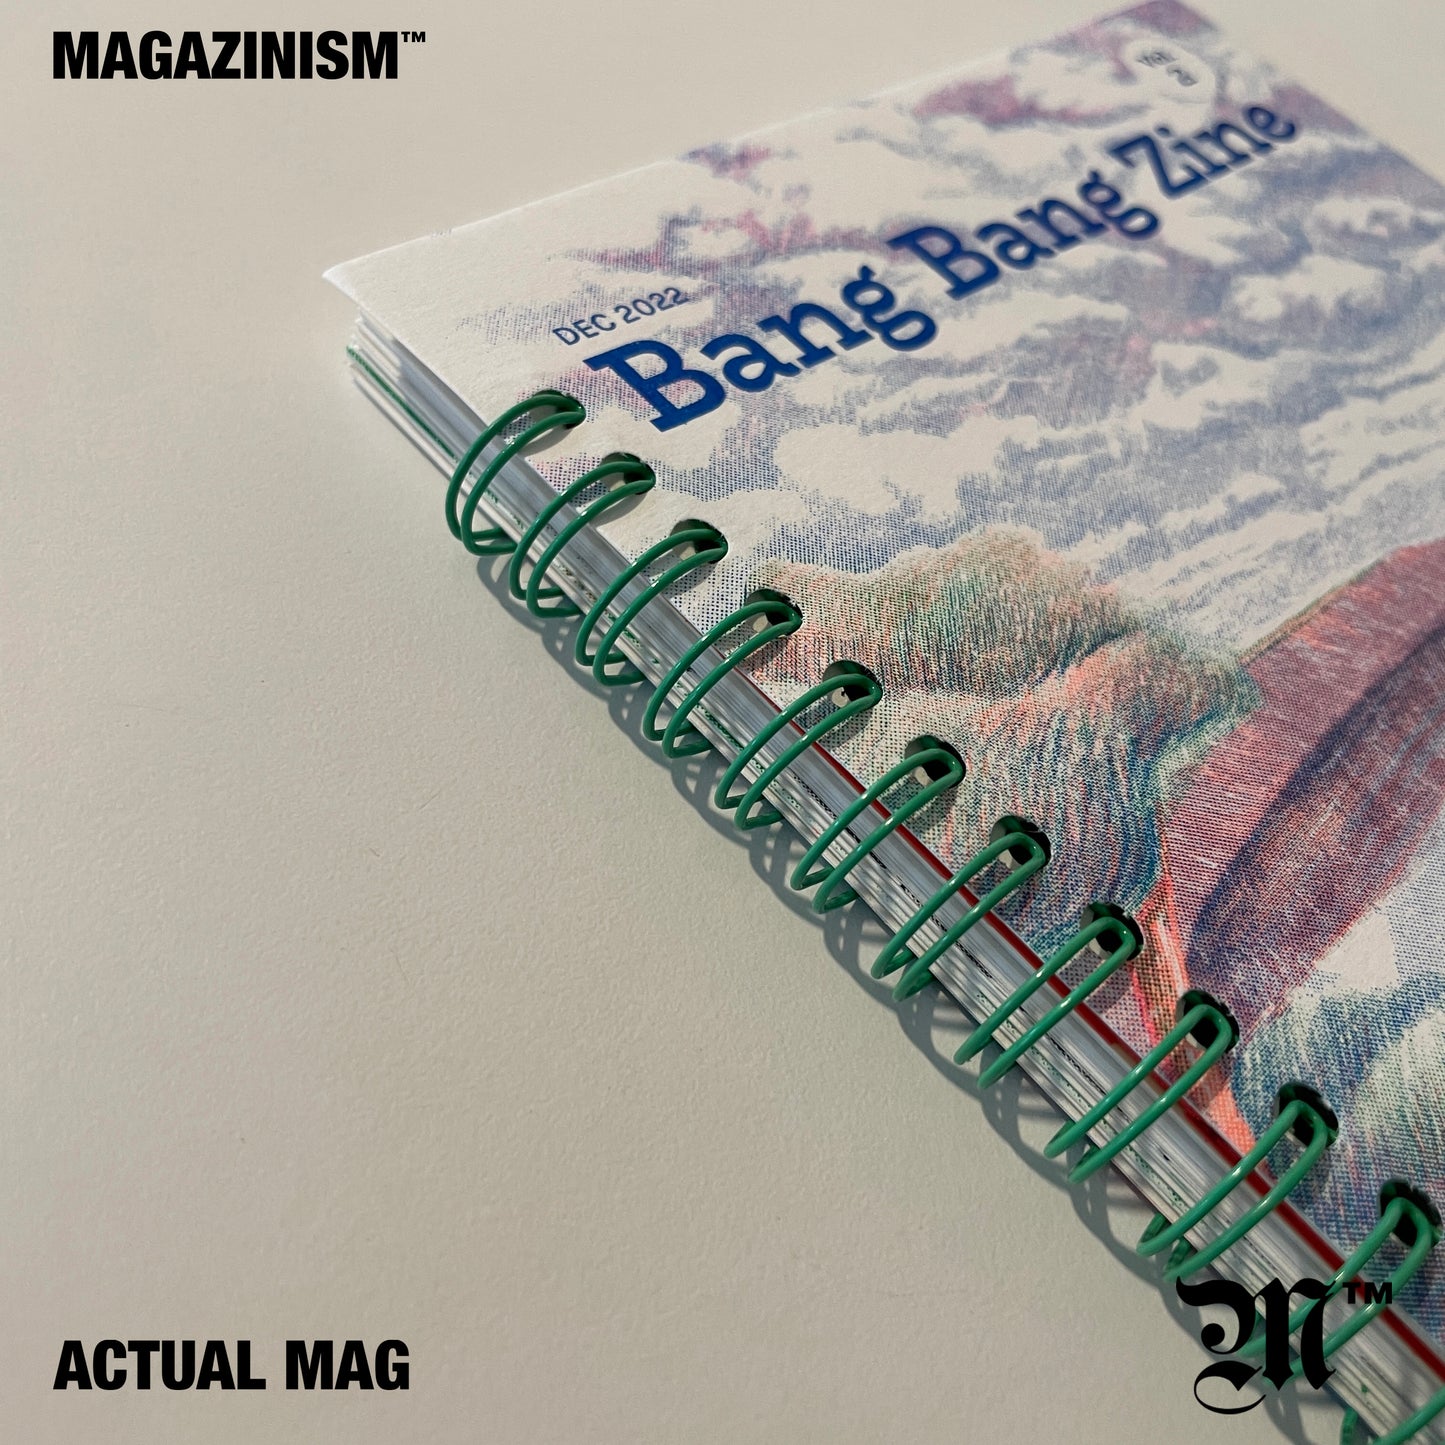 Bang Bang Zine Vol.2 Dec 2022 - Malaysia